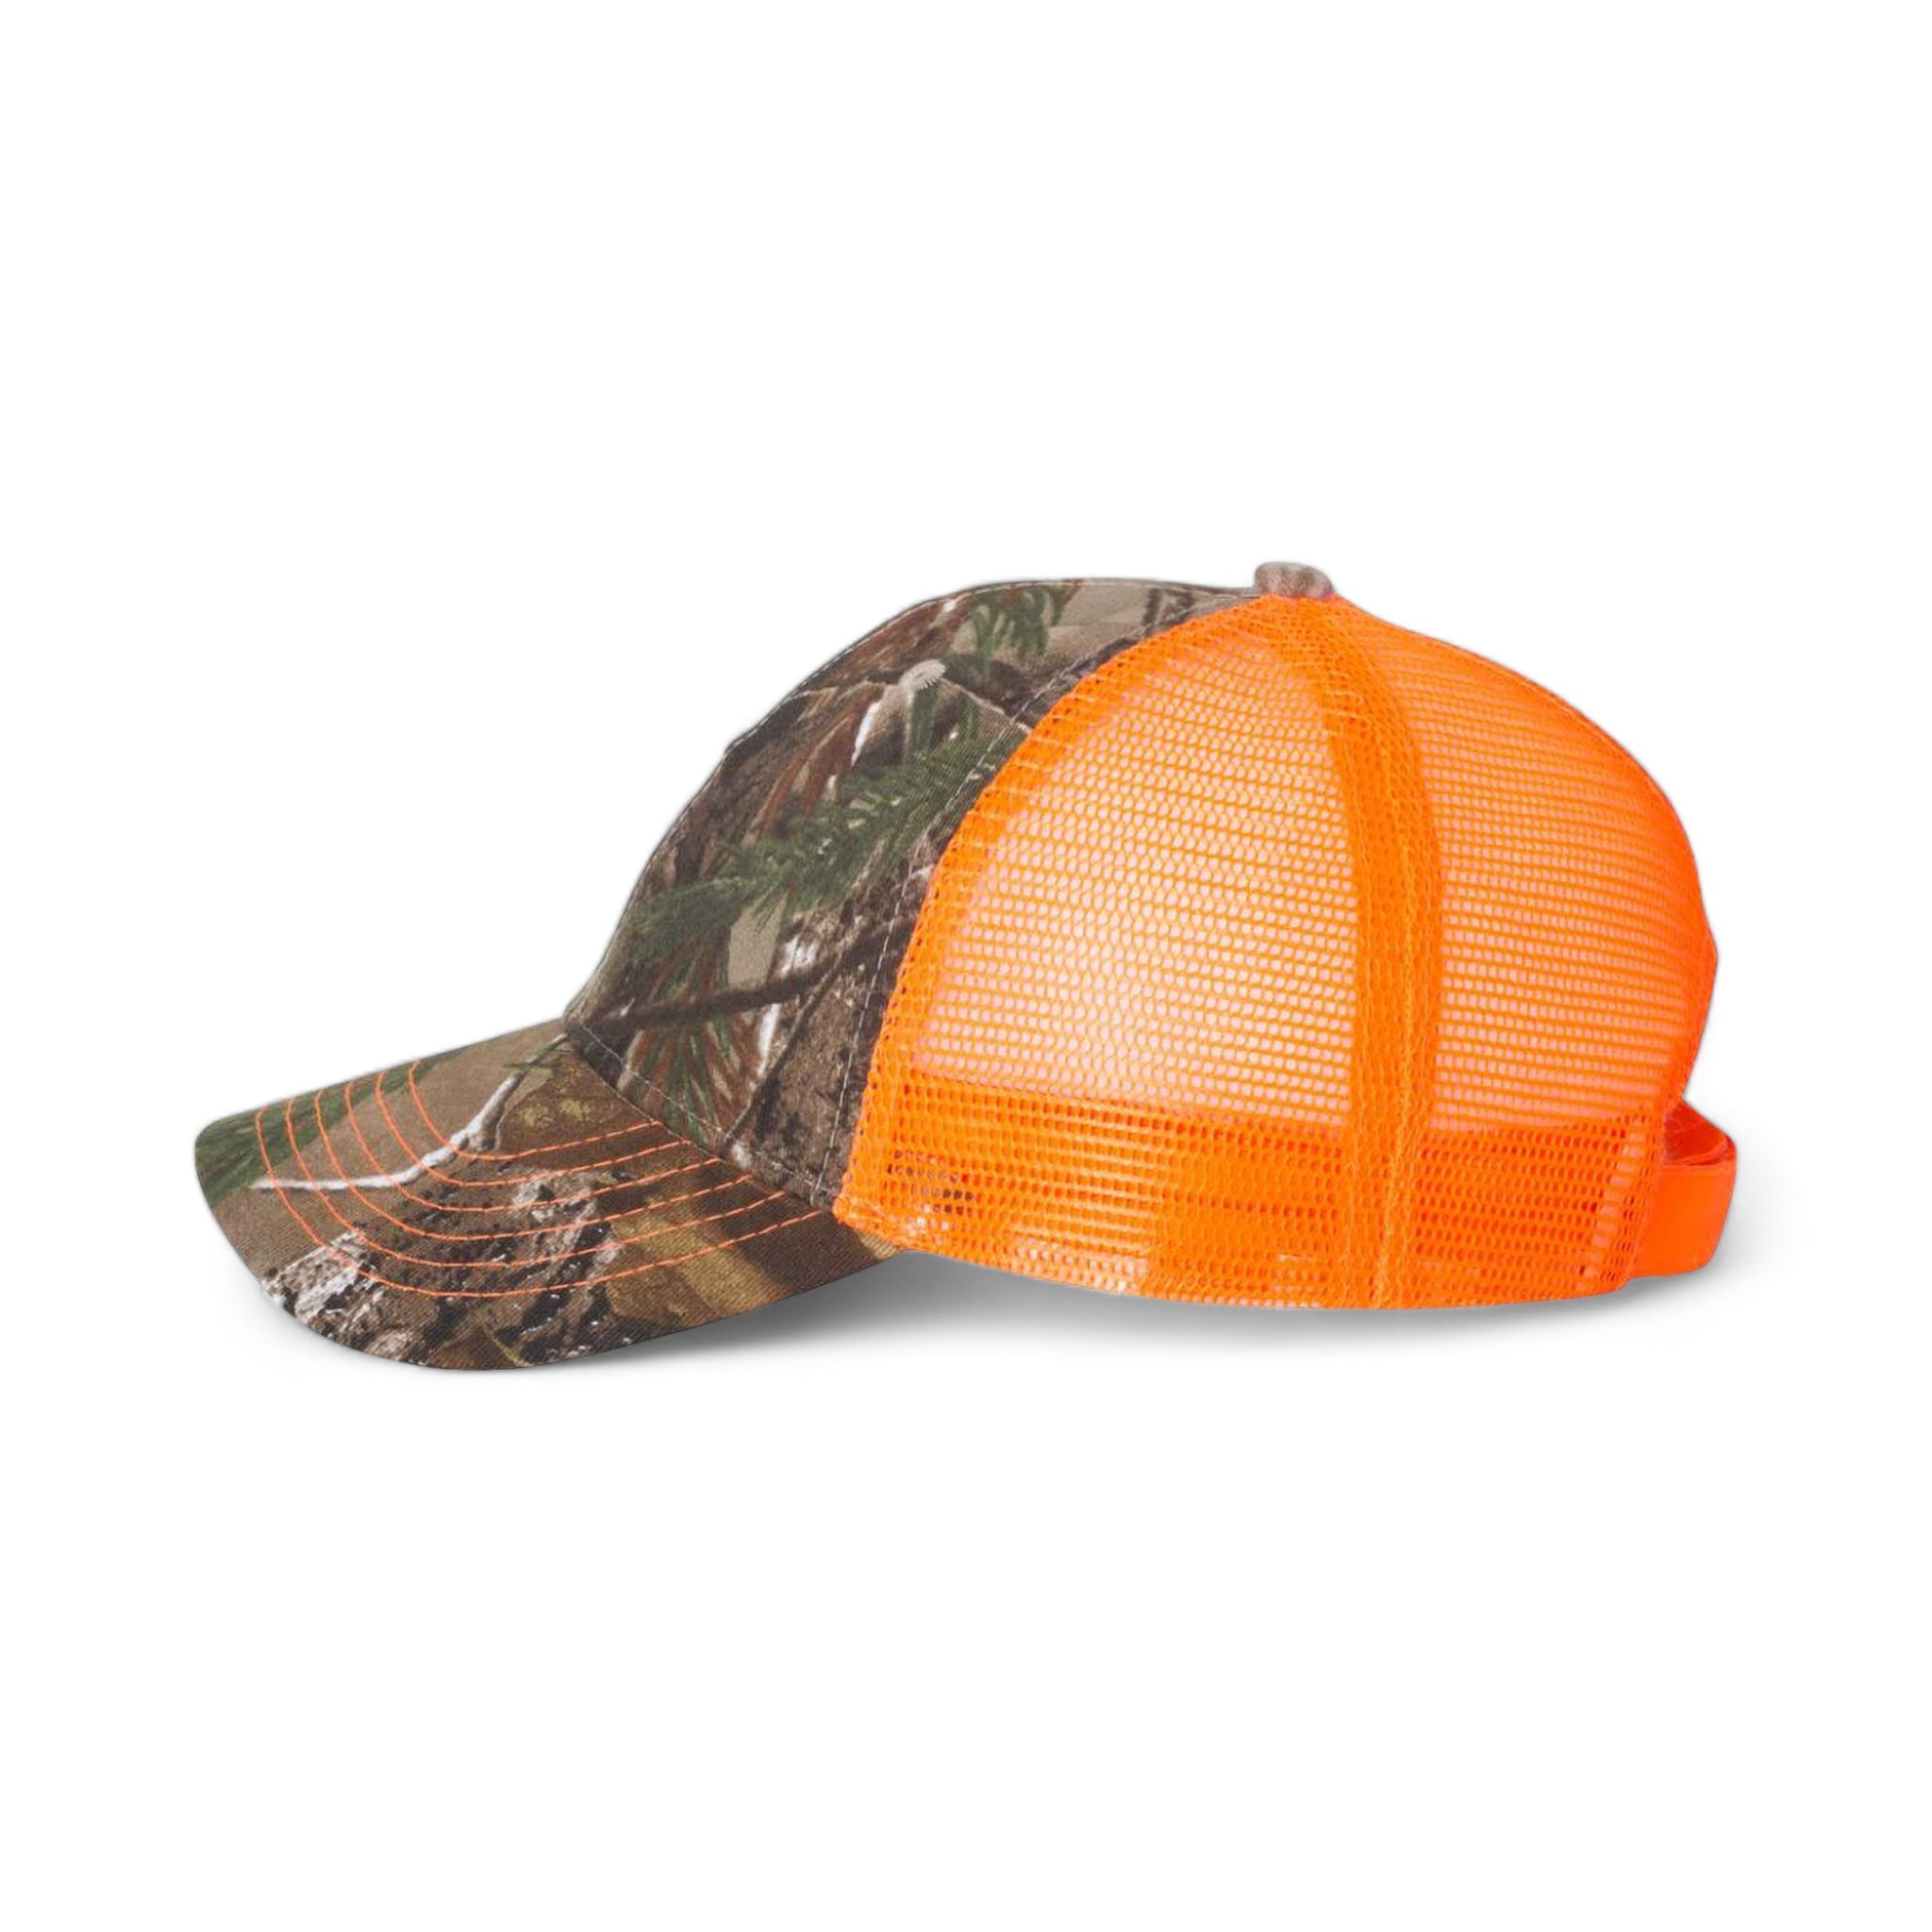 Side view of Kati LC5M custom hat in realtree ap and neon orange